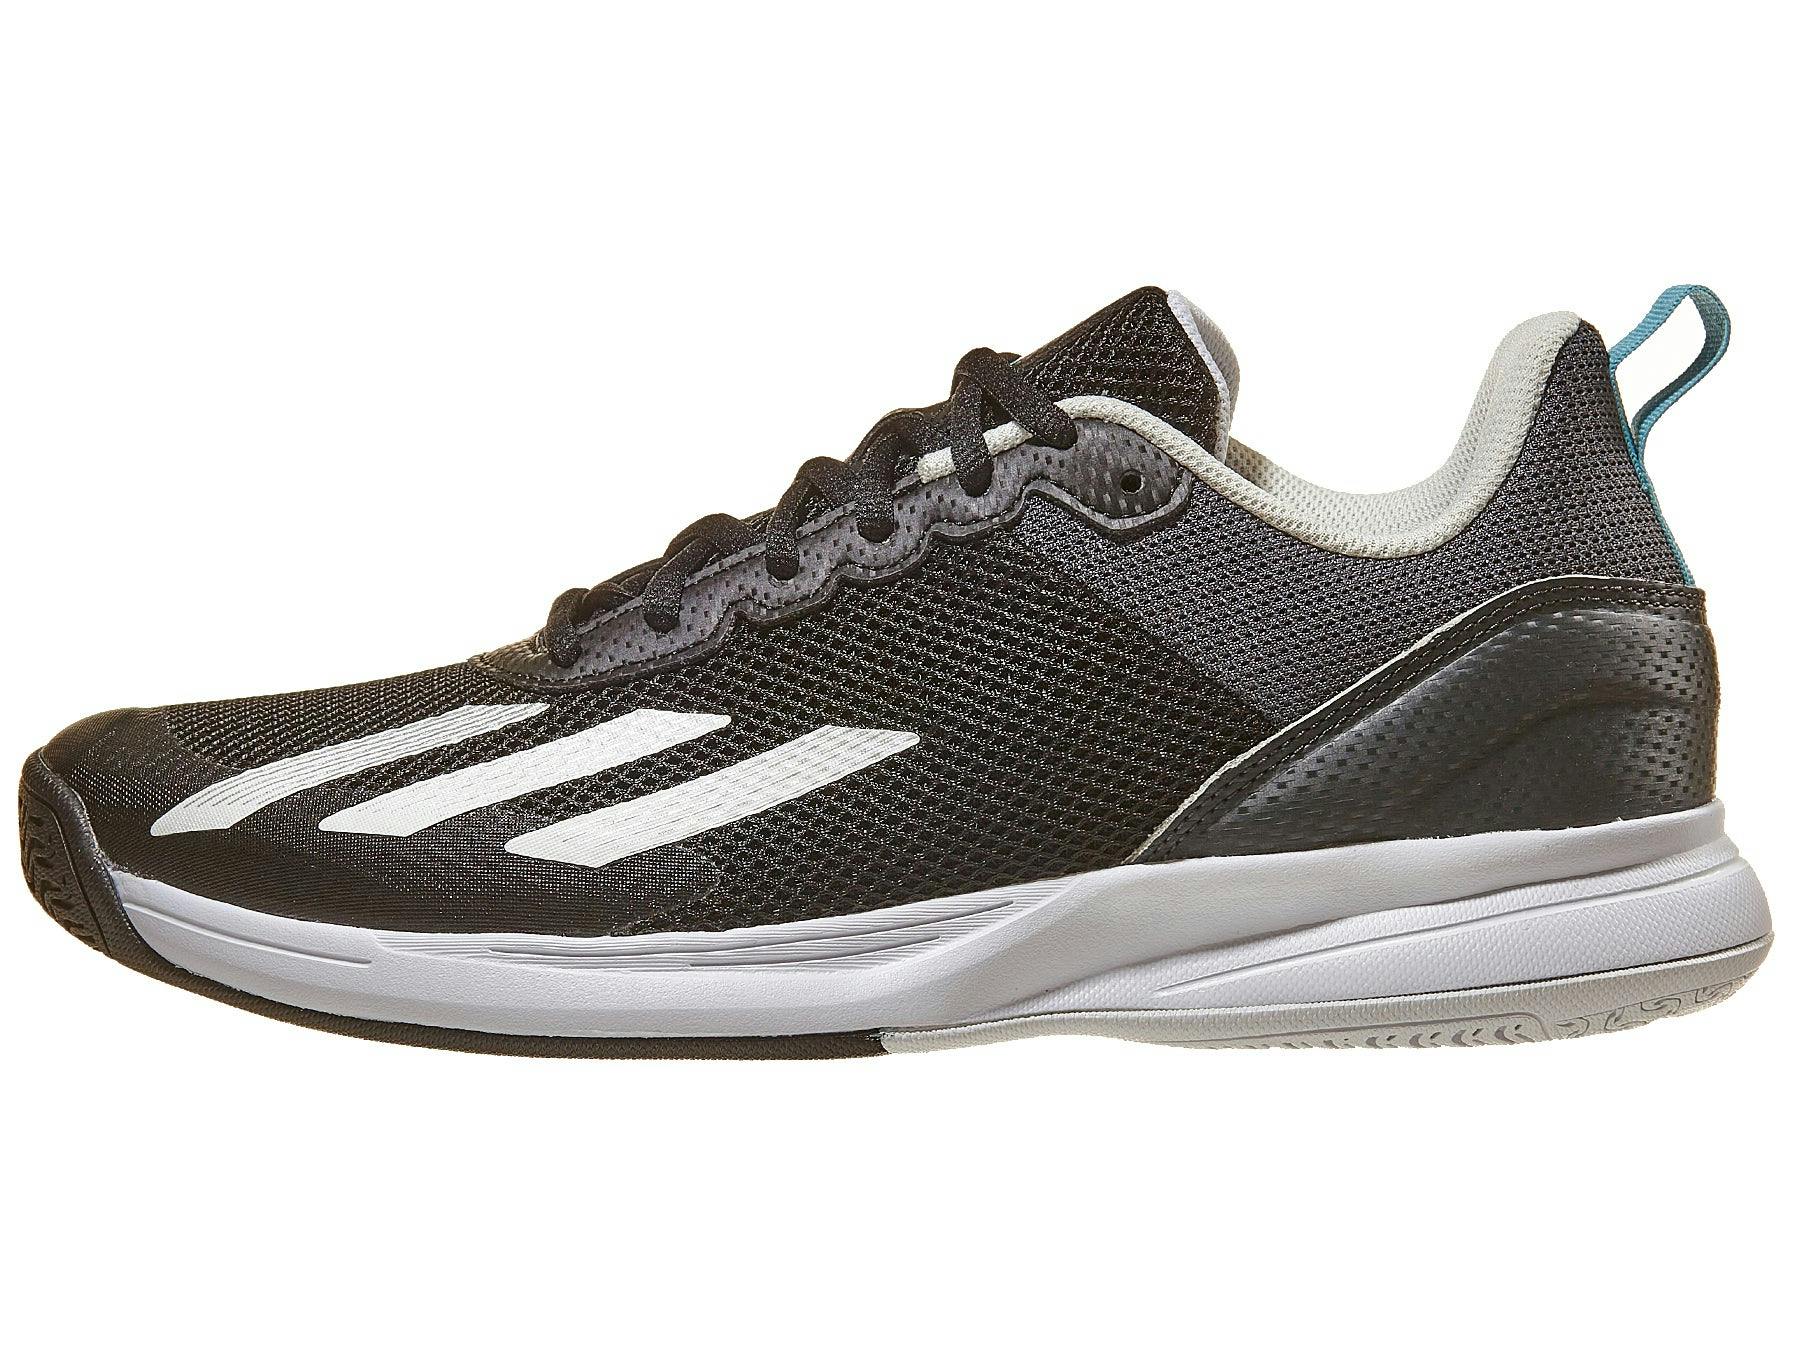 Adidas Men's Courtflash Speed Tennis Shoes